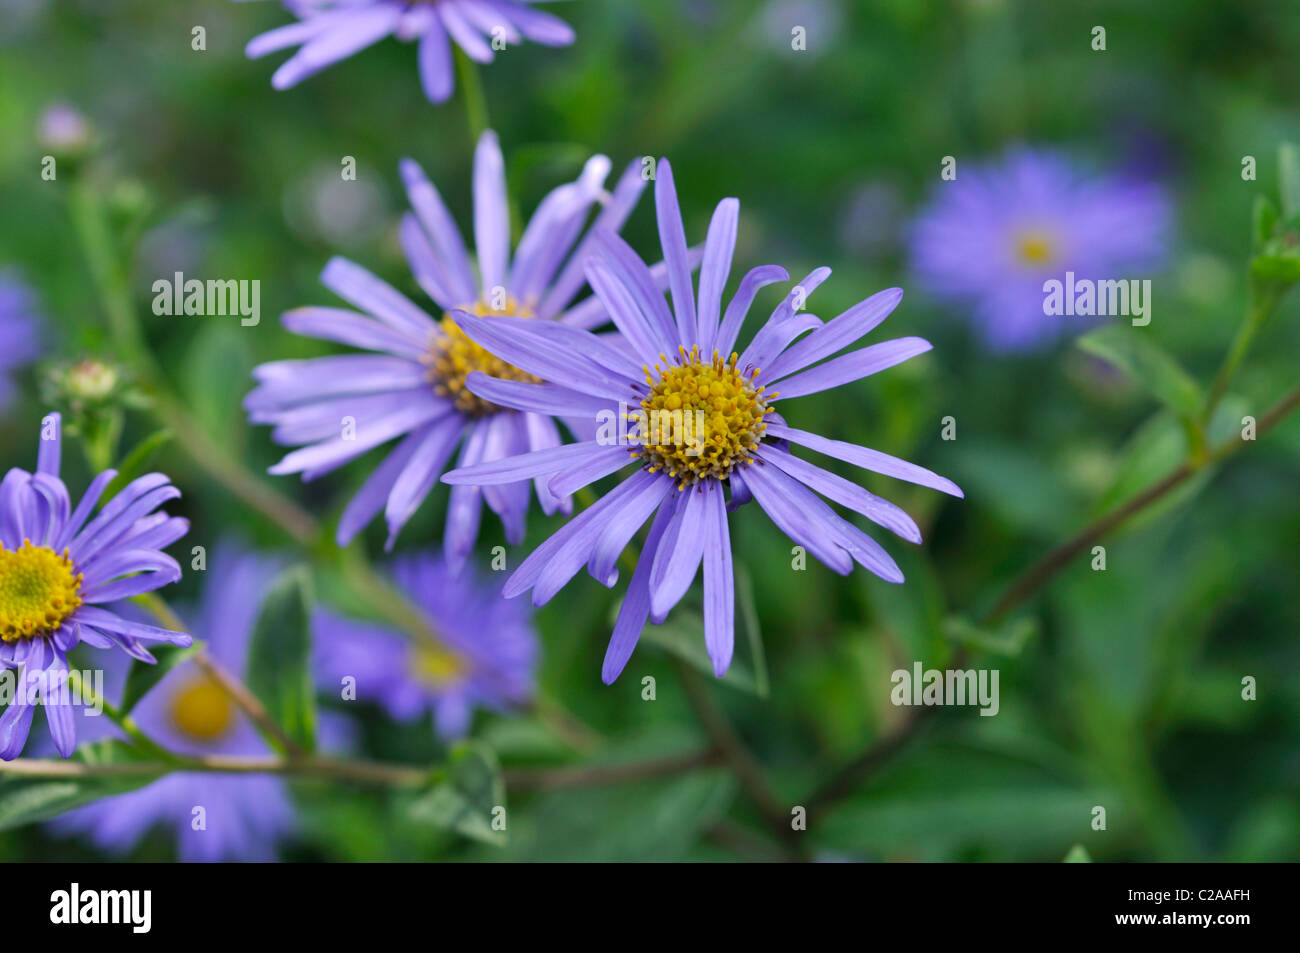 Cut-leaved daisy (Brachyscome multifida 'Harmony') Stock Photo